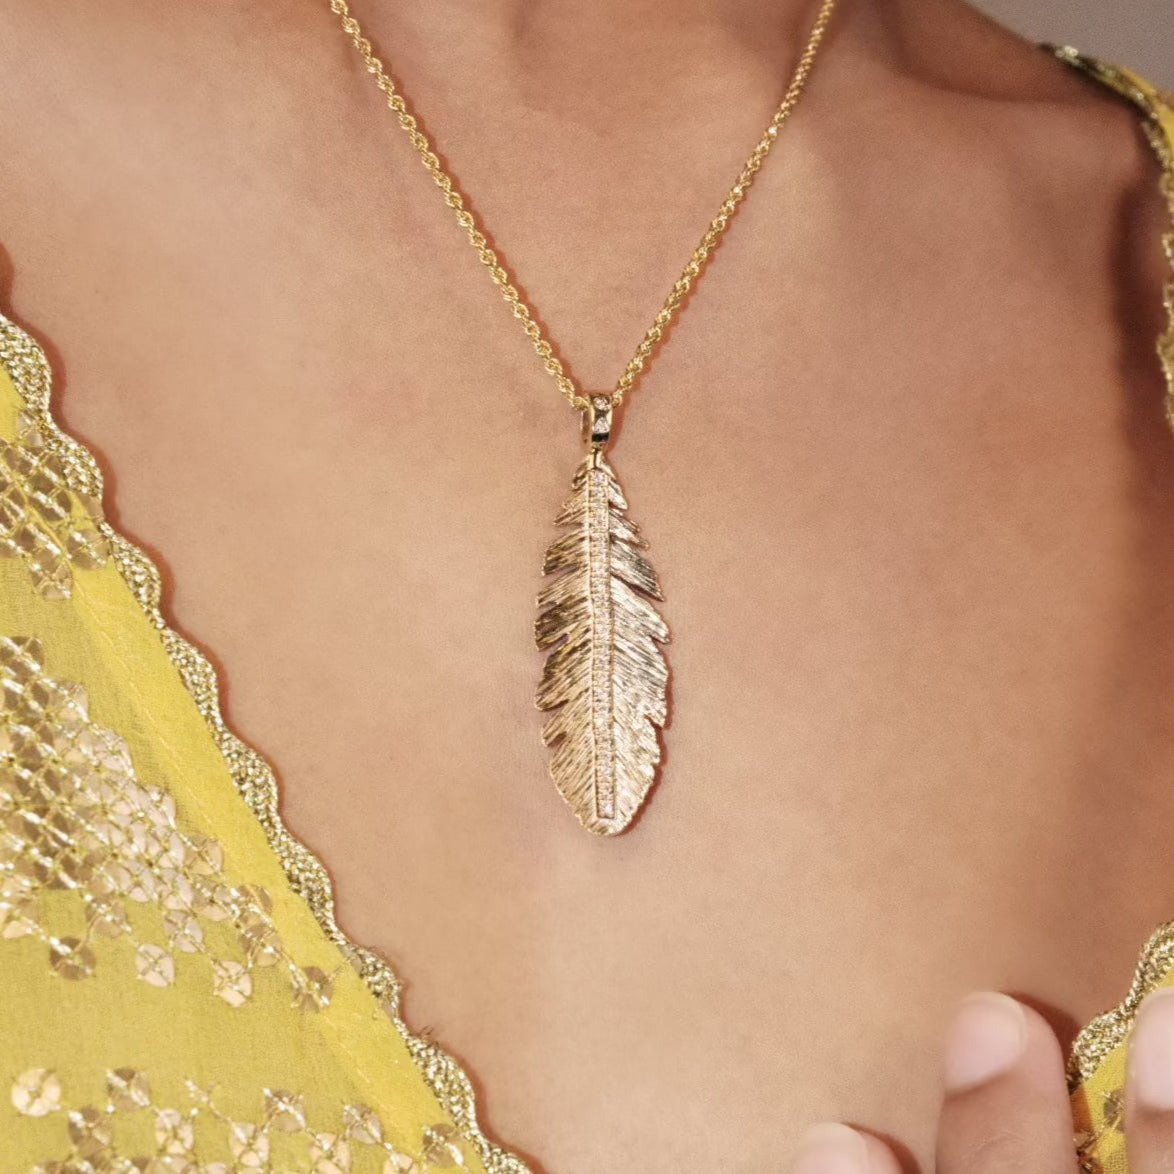 Feather pendant 14 carat gold and diamonds